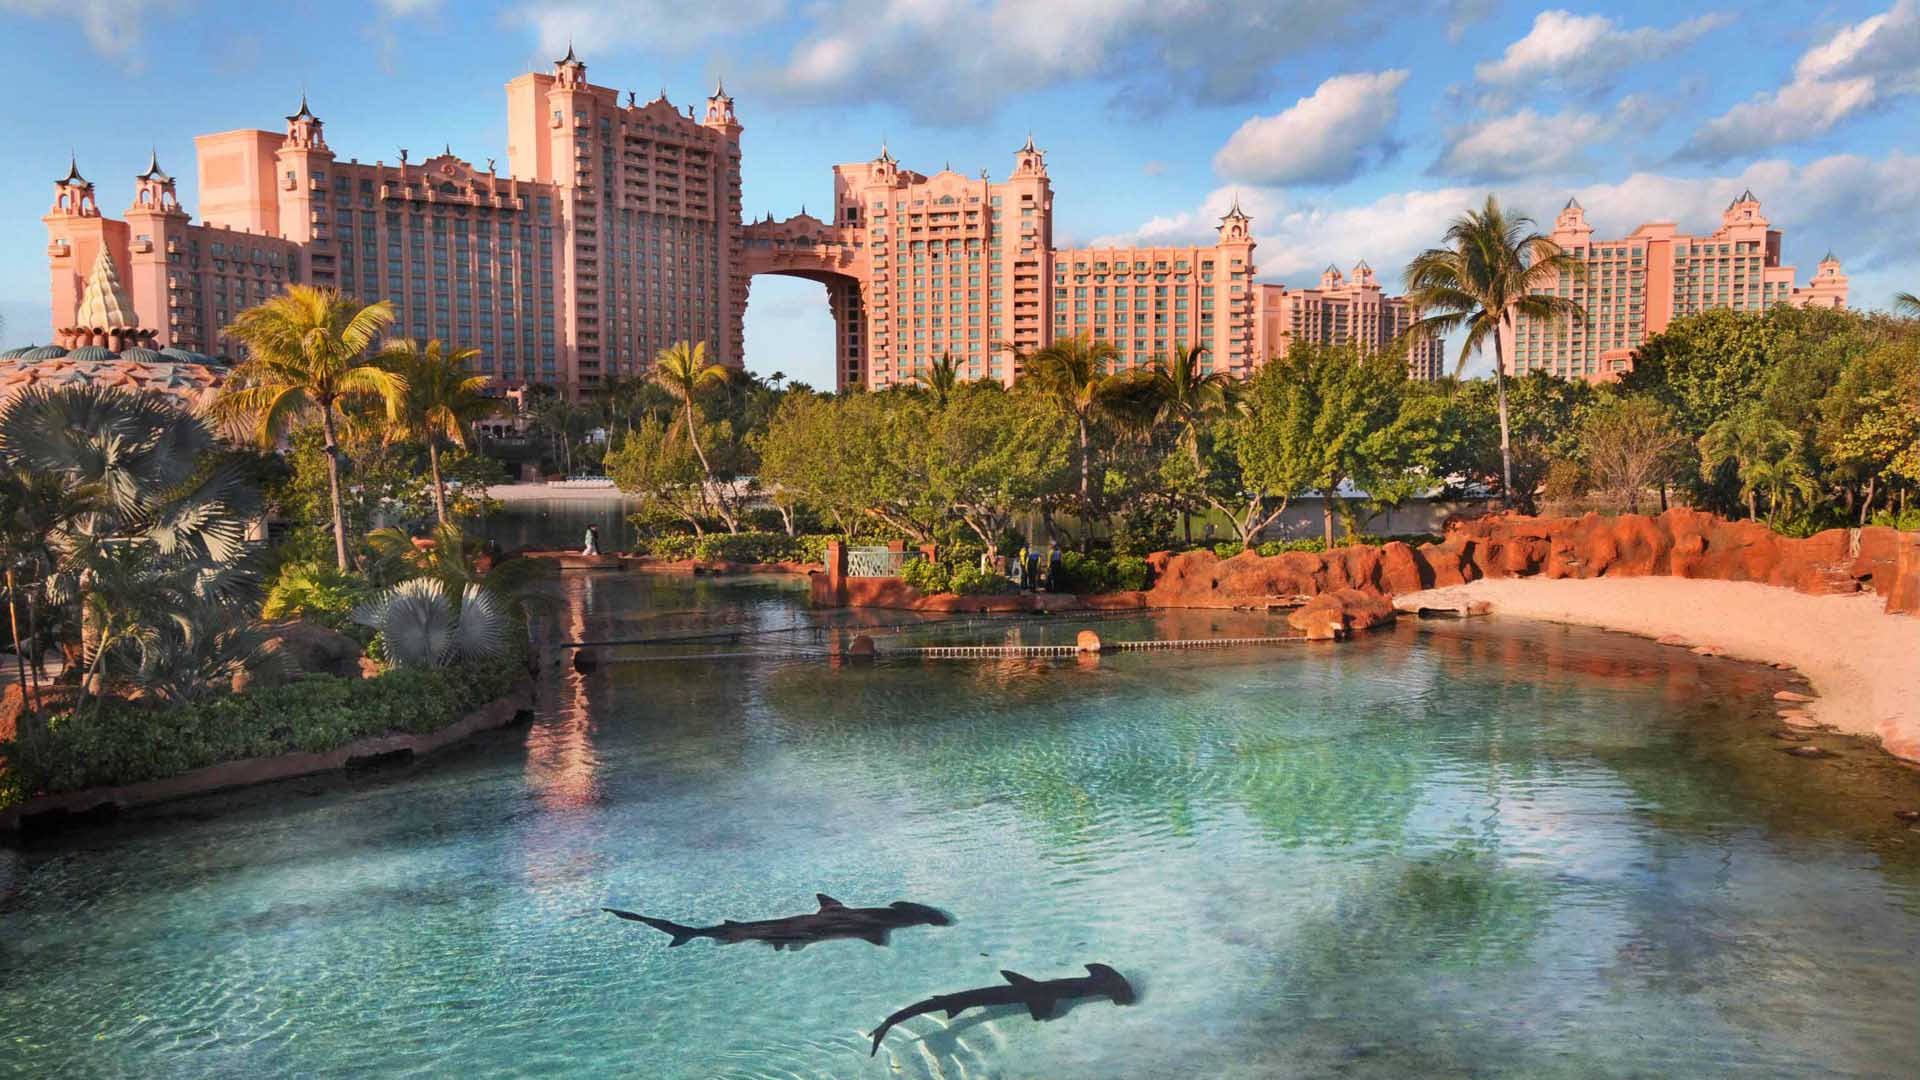 Bahamas Royal Atlantis View Background